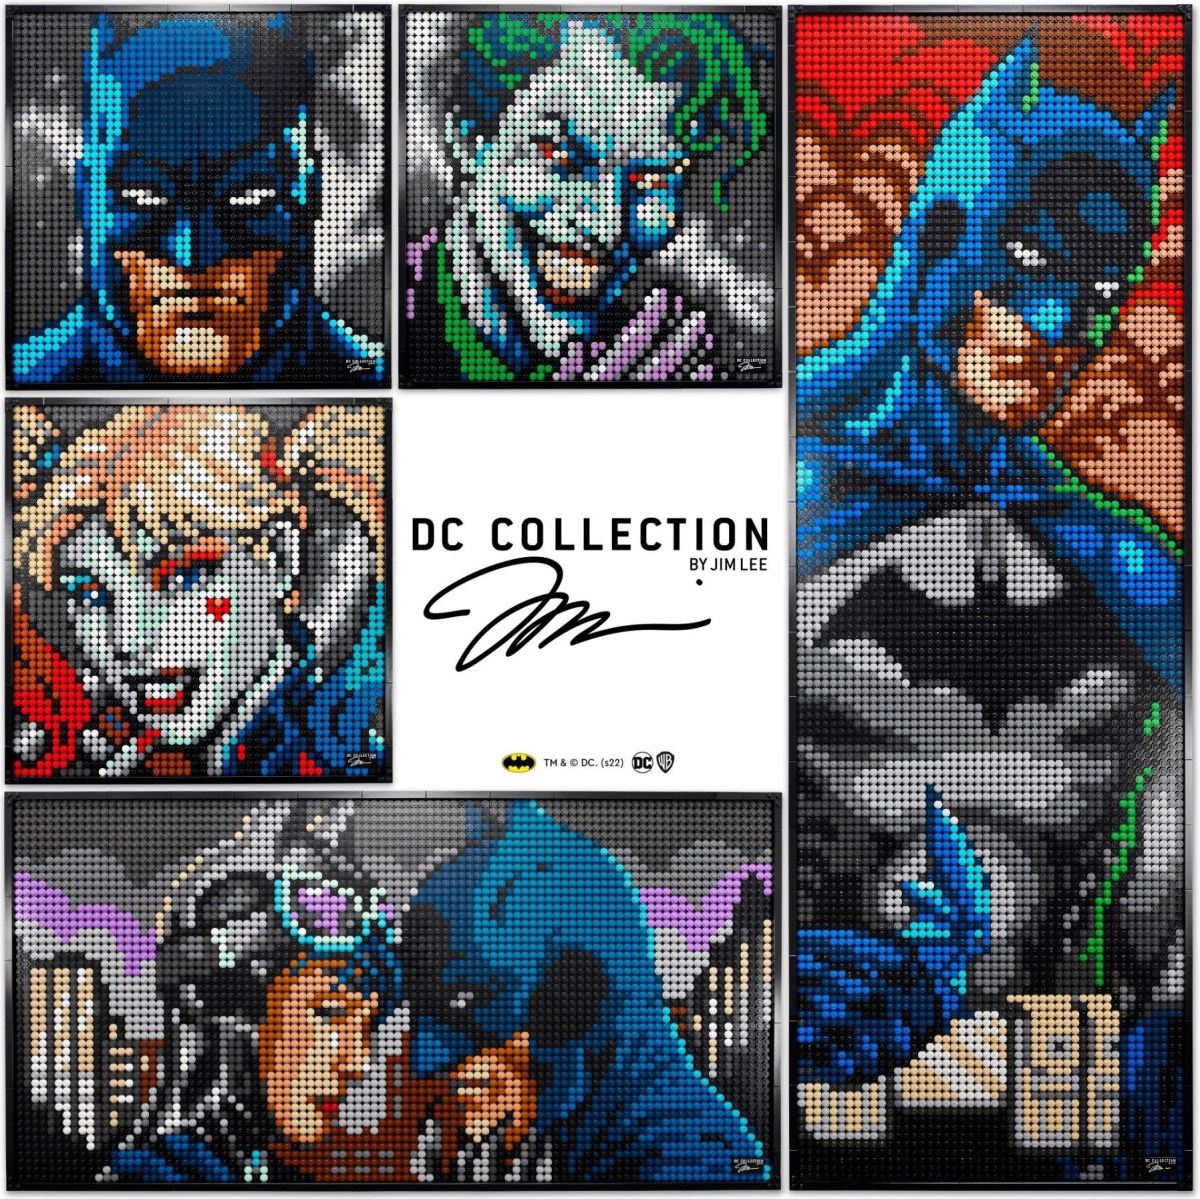 LEGO Art “Jim Lee Batman Collection” (31205) Revealed